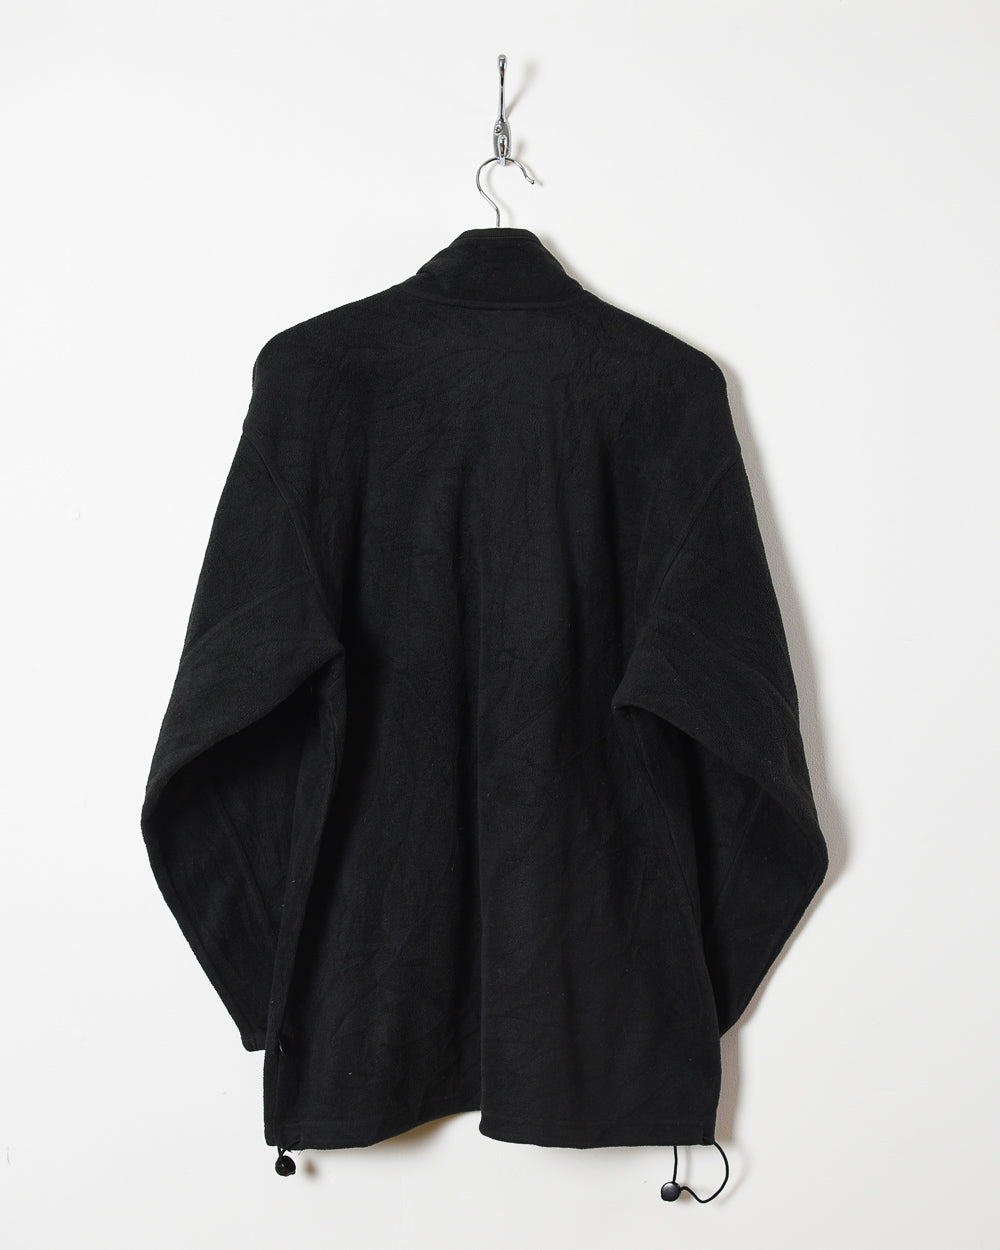 Black Adidas 1/4 Zip Fleece - Large